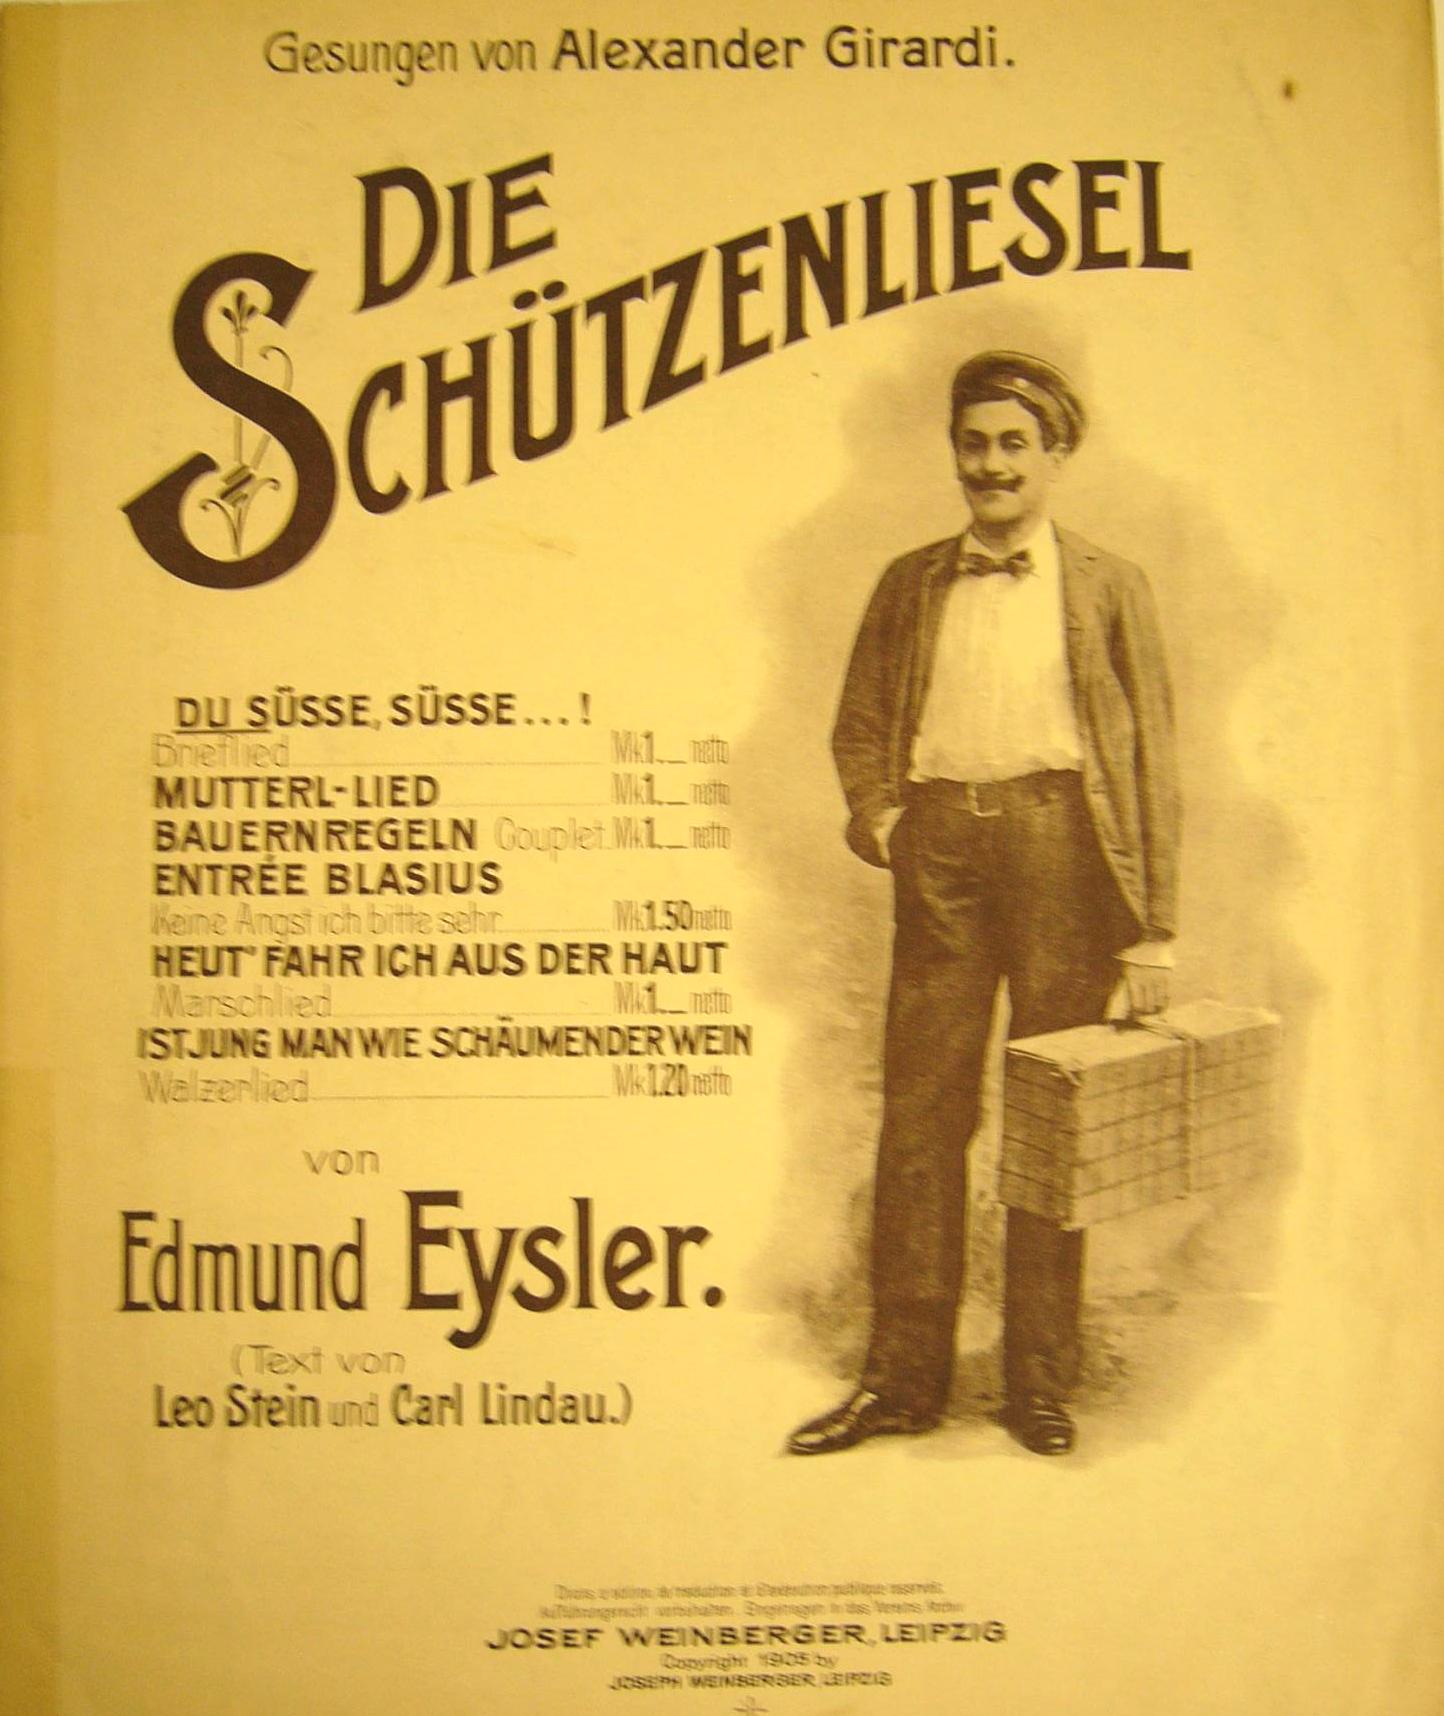 Sheet music for Eysler's "Schützenliesel" with Alexander Girardi on the cover.